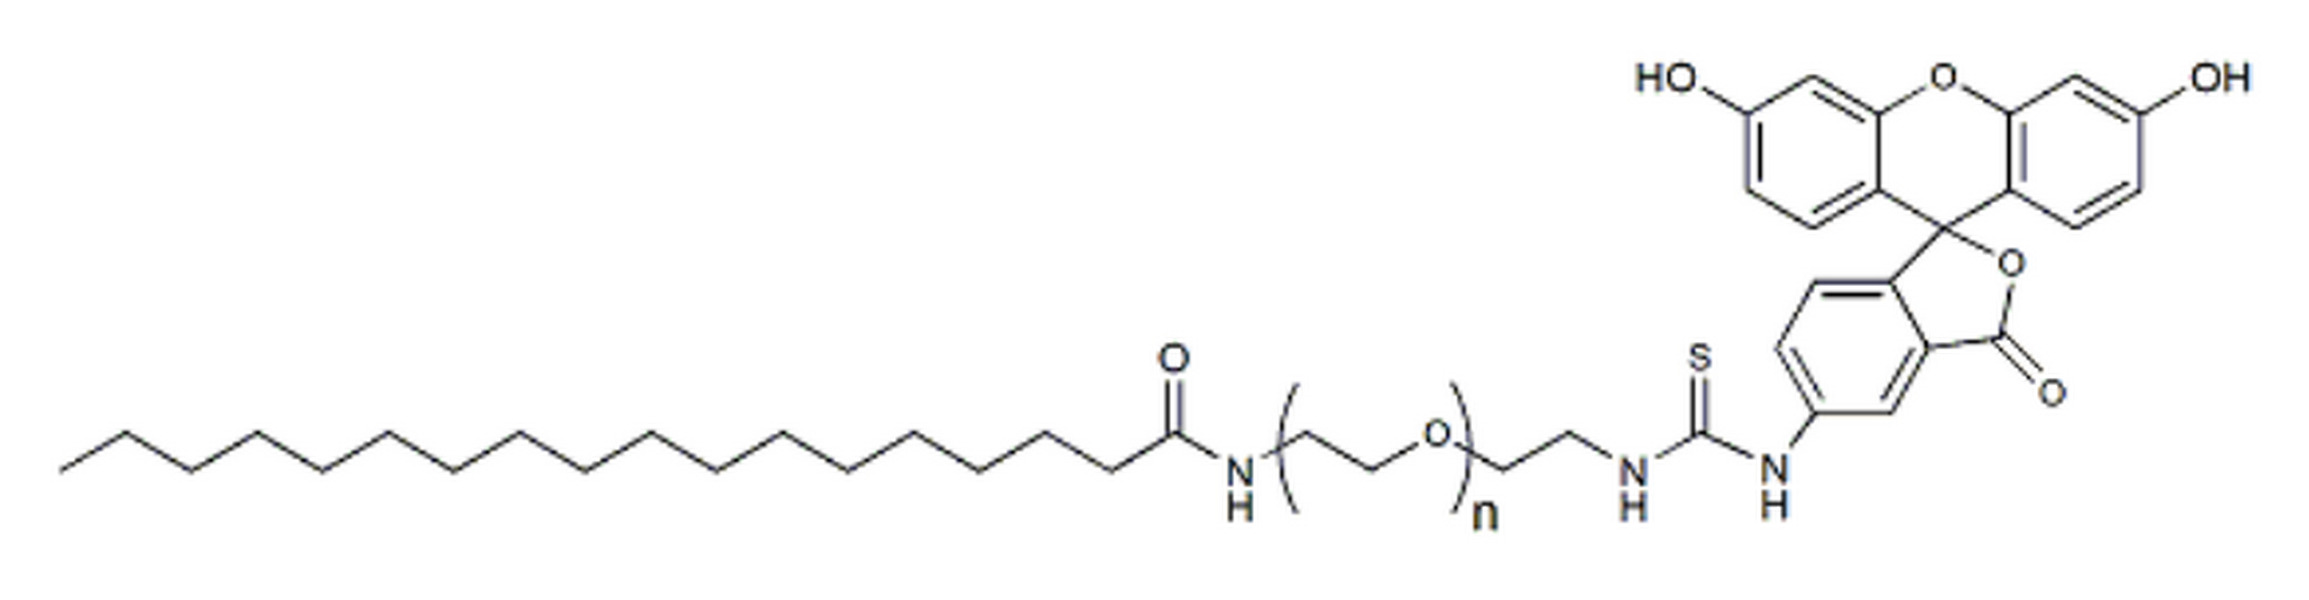 Stearic acid-PEG-FITC, MW 2K